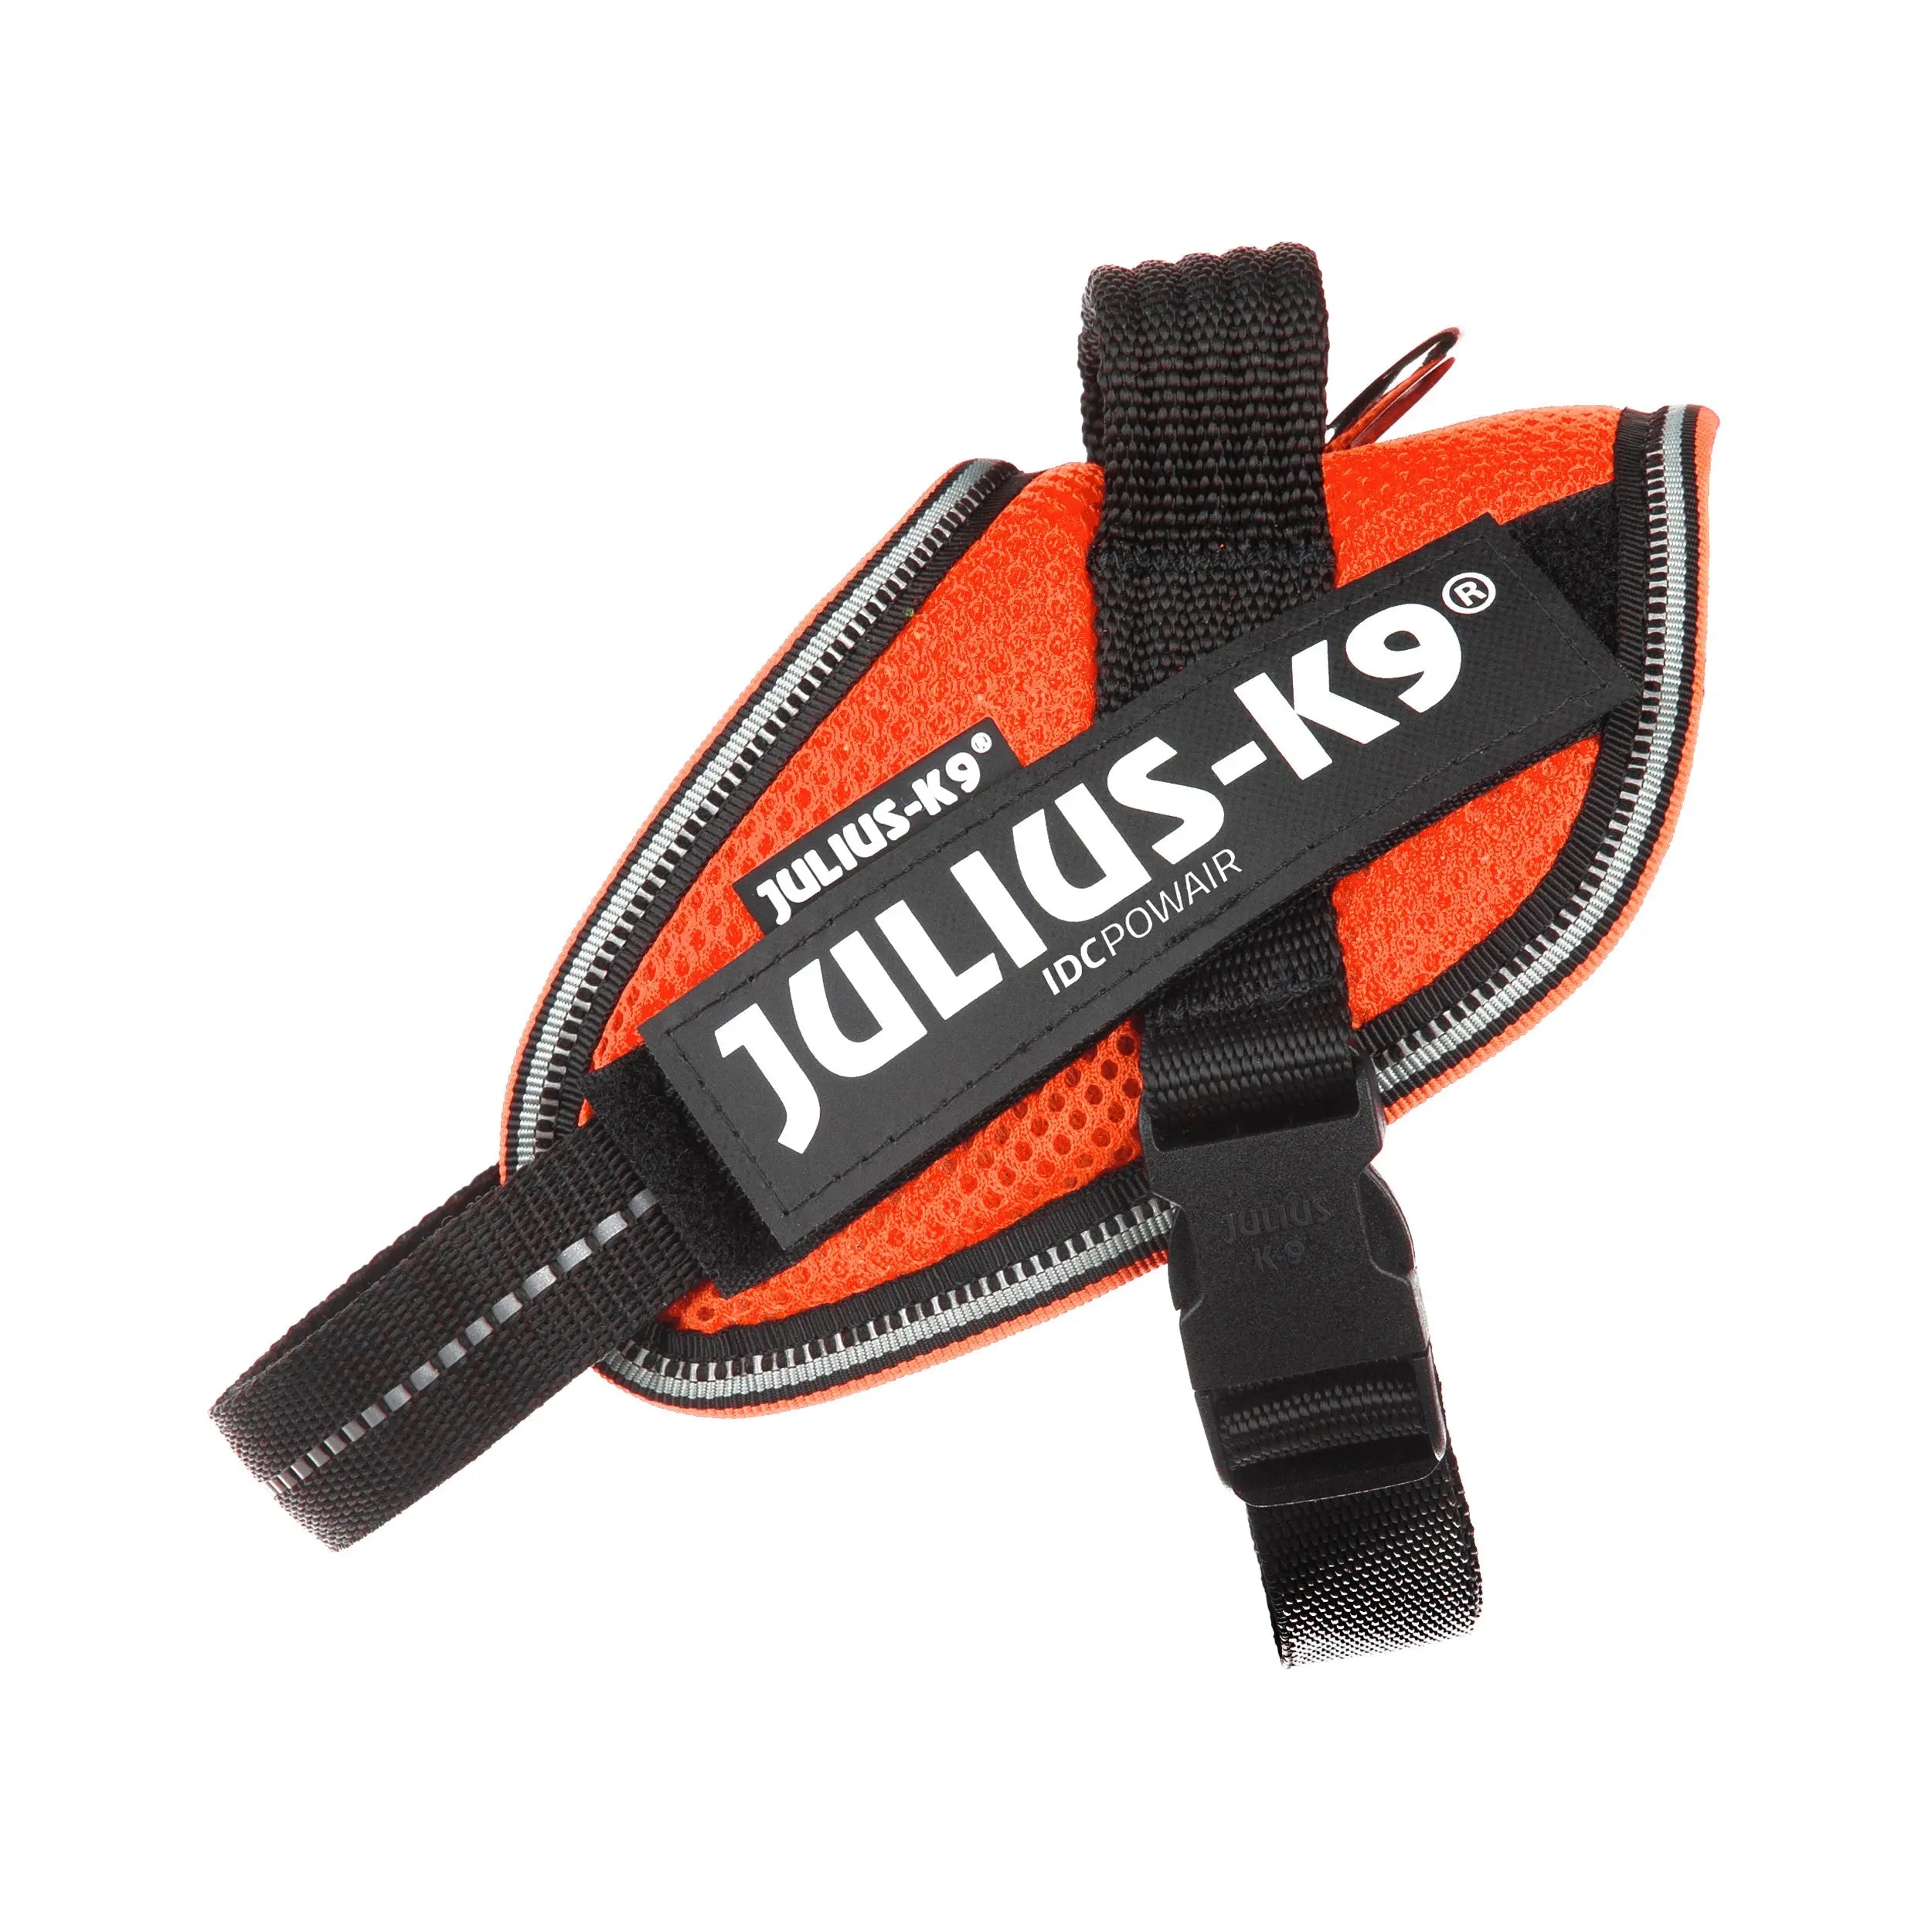 Julius-K9® IDC® Powair harness - Julius-K9 LLC